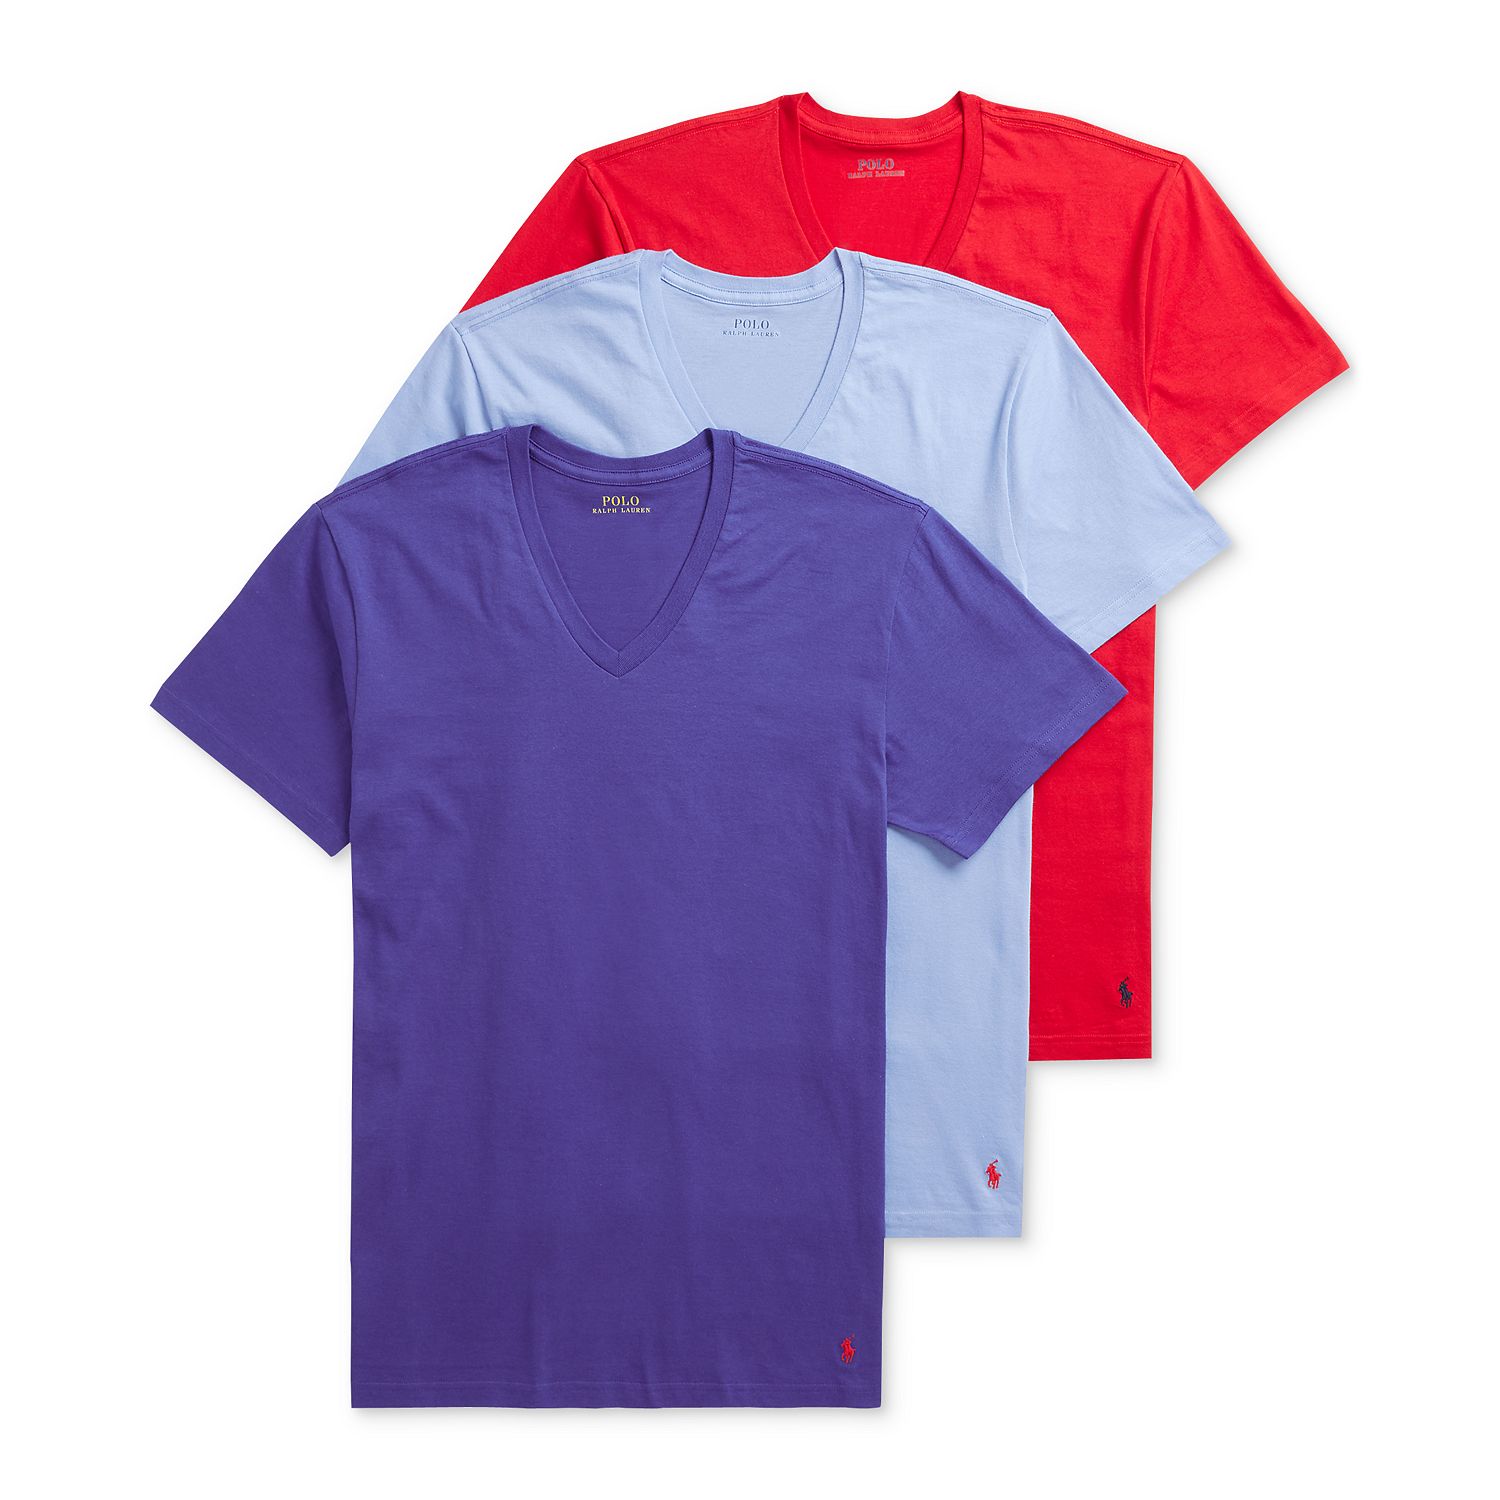 Fietstaxi Zeestraat Verkeerd 3-Pack Polo Ralph Lauren Men's Cotton V-Neck T-Shirts (Medium only) $14.88  ($4.96 each) + 10% Slickdeals Cashback + Free Store Pickup at Macys or free  shipping on $25